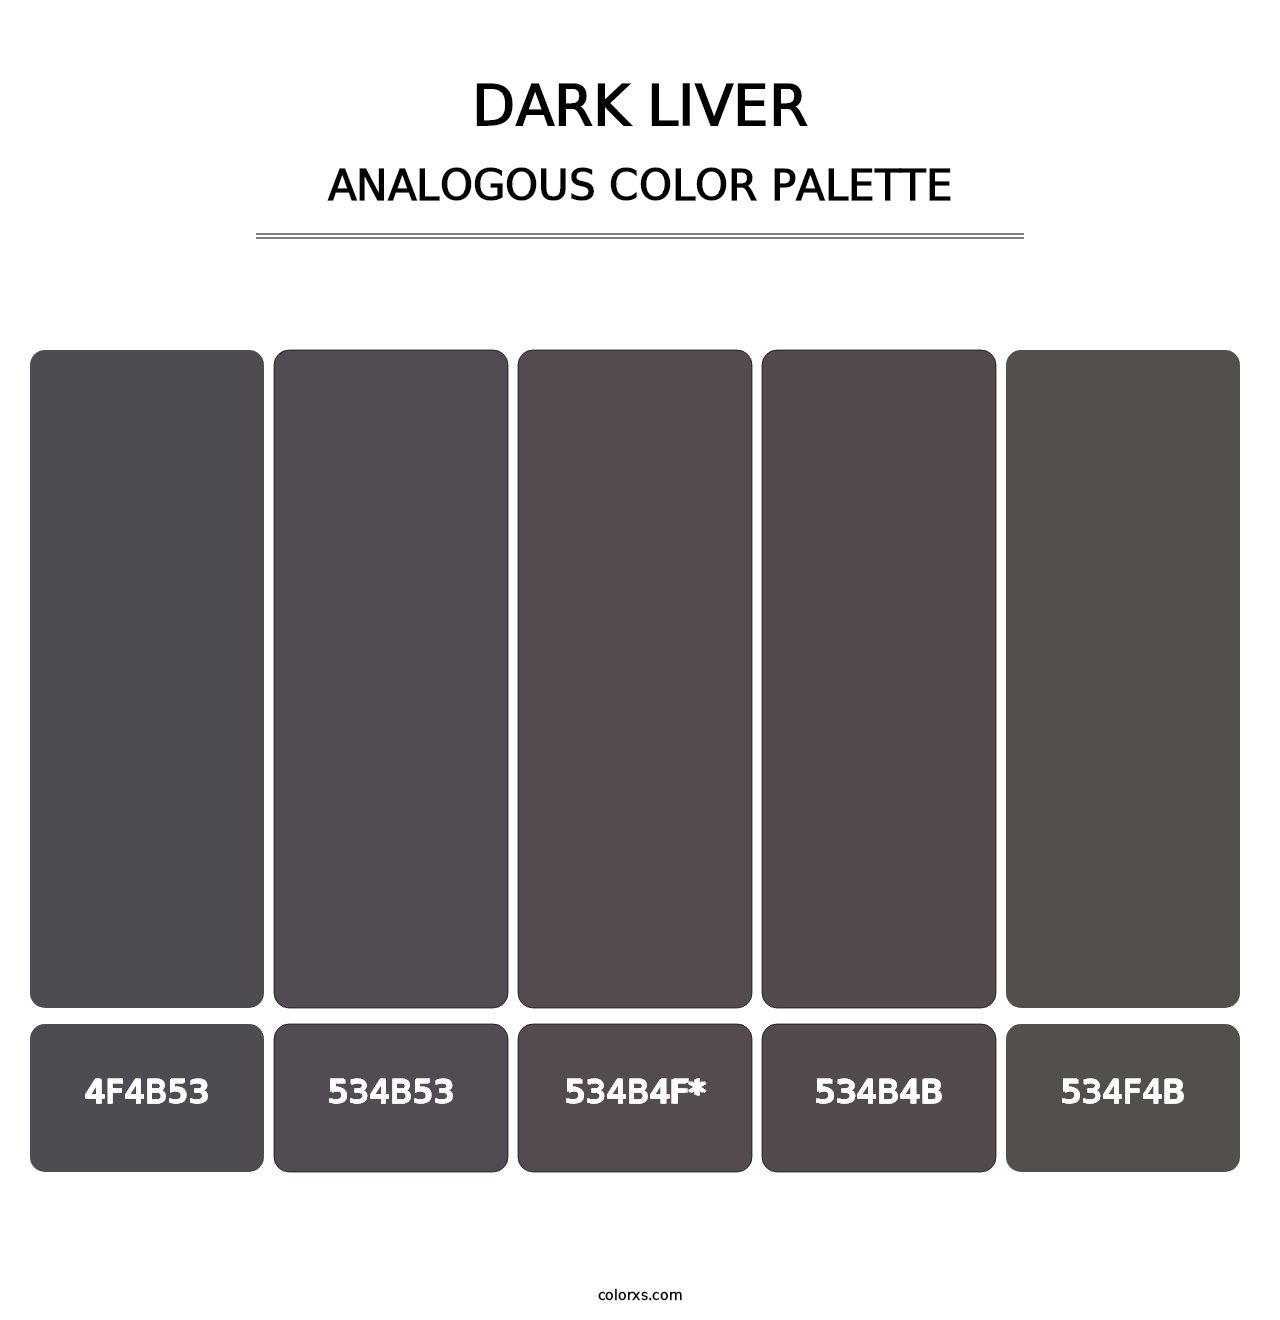 Dark Liver - Analogous Color Palette